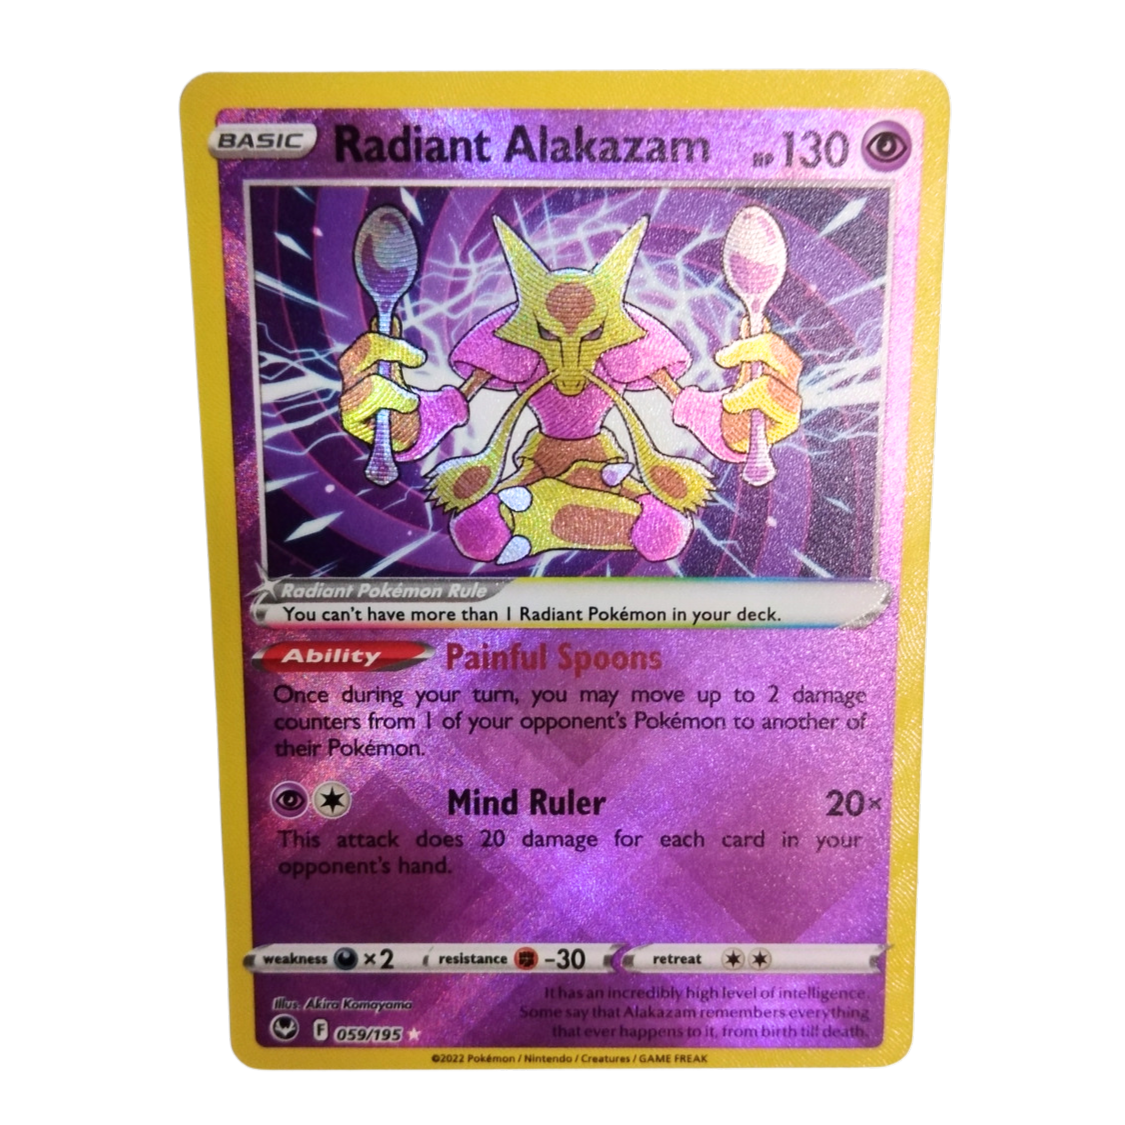 Radiant Alakazam - 059/195 - Silver Tempest